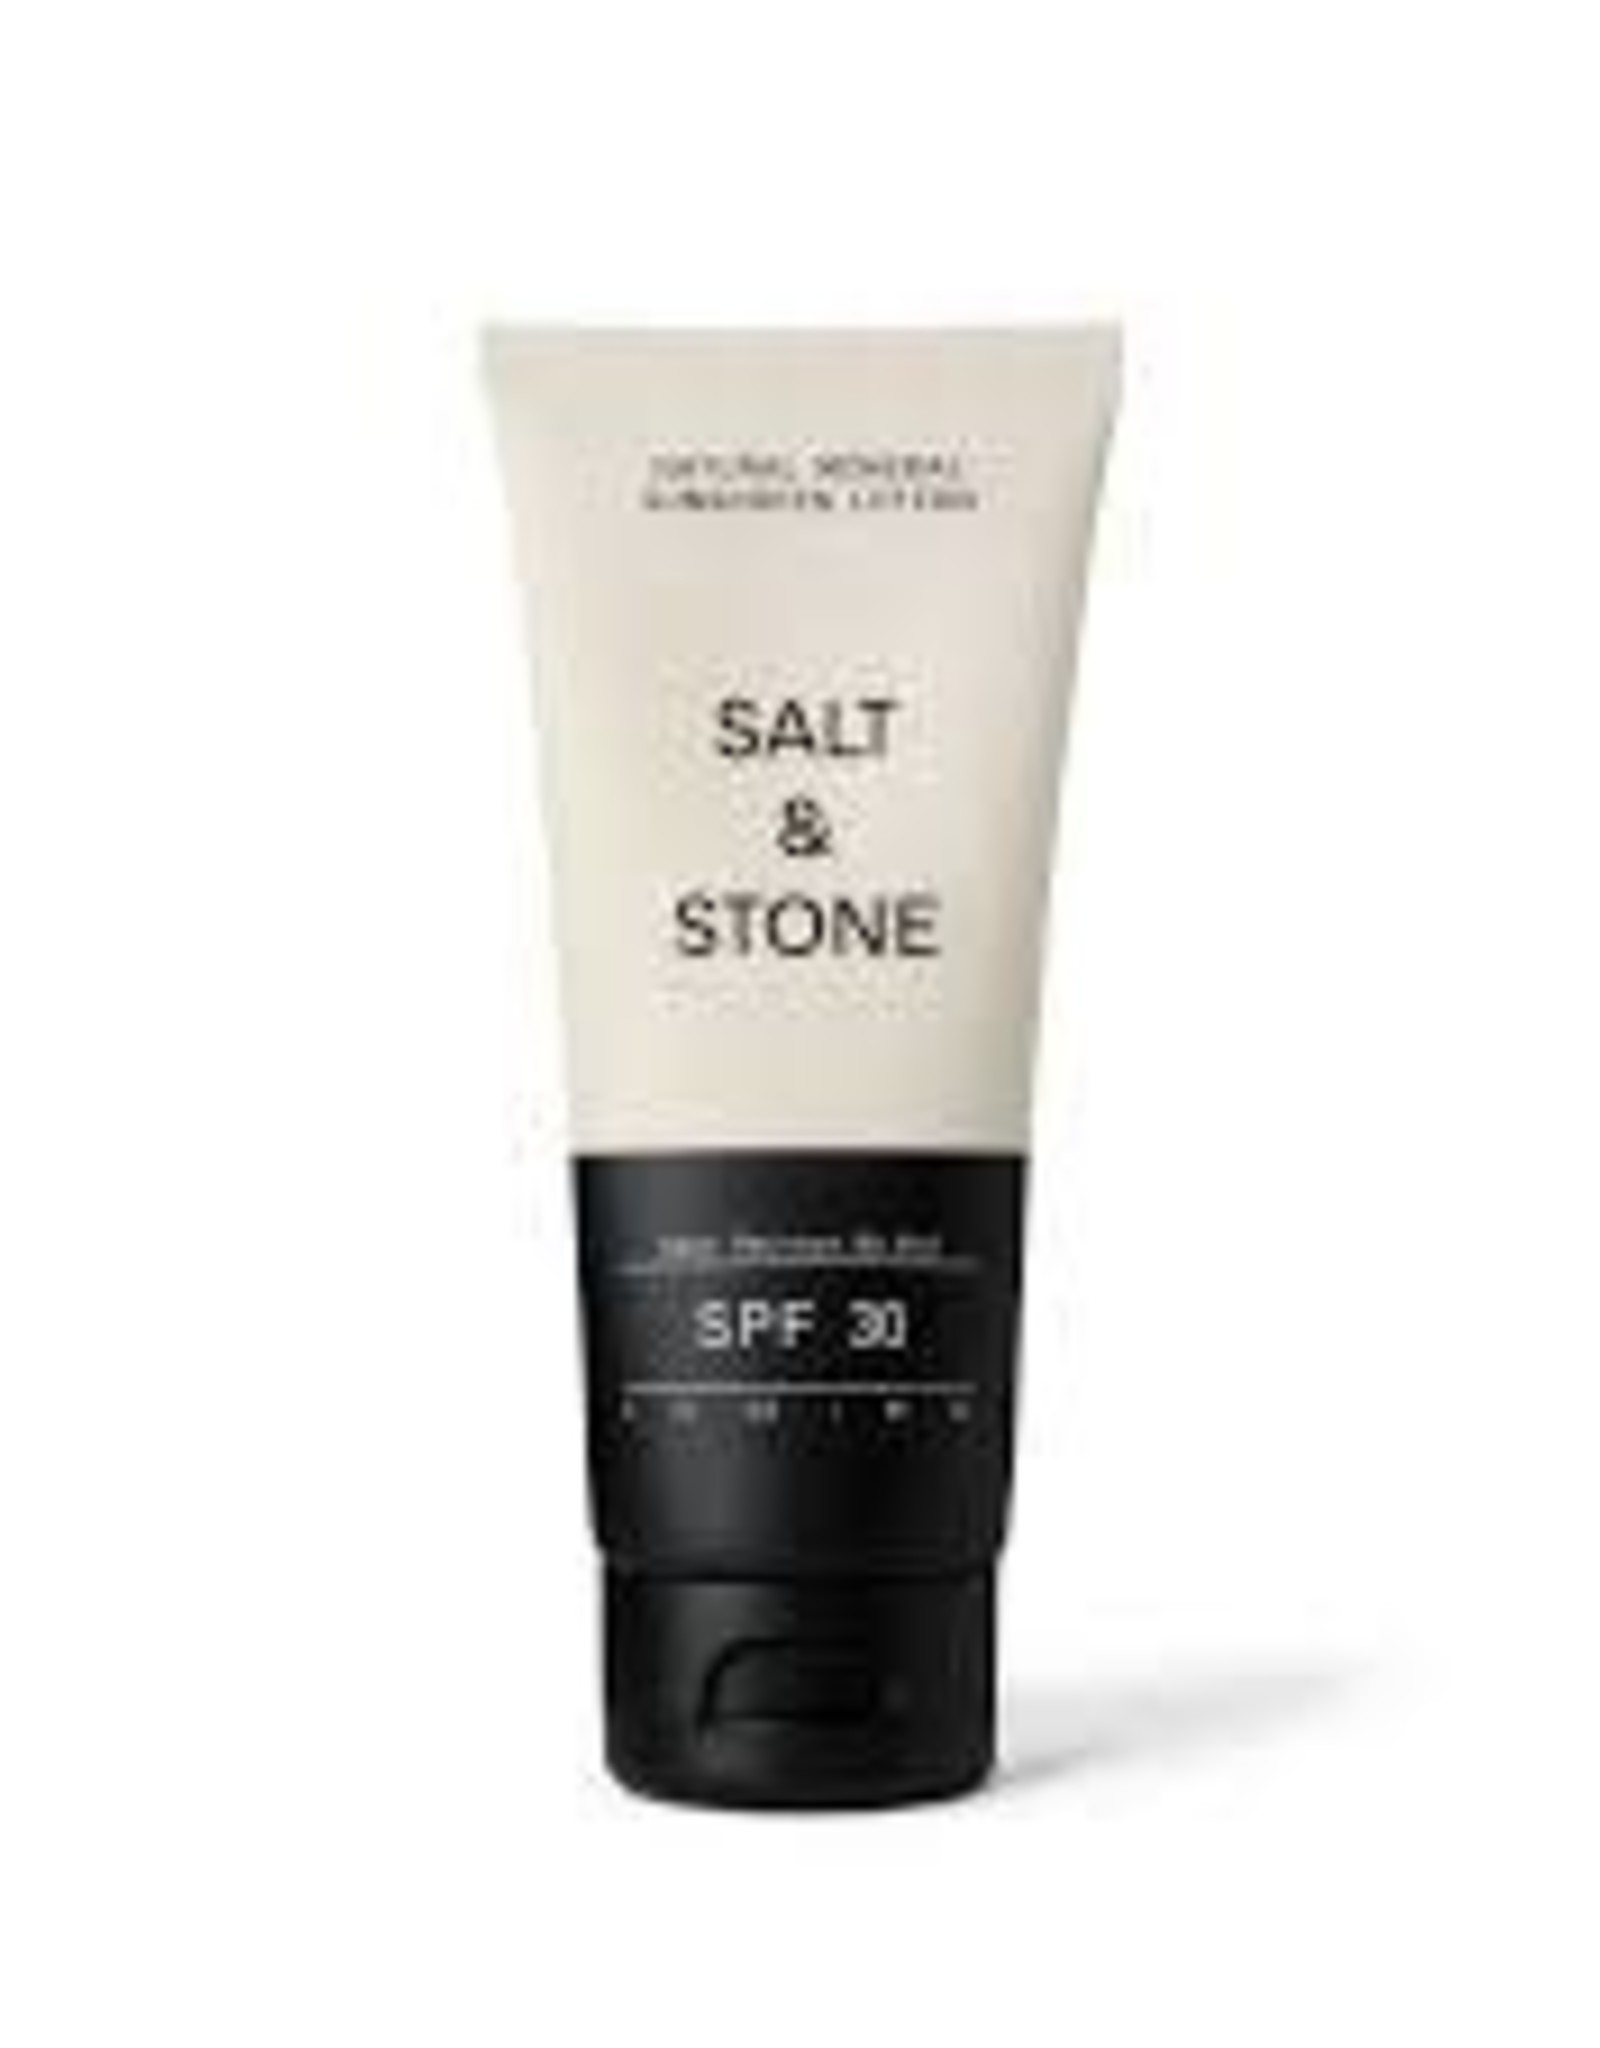 salt and stone Salt & Stone SPF 30 Tube